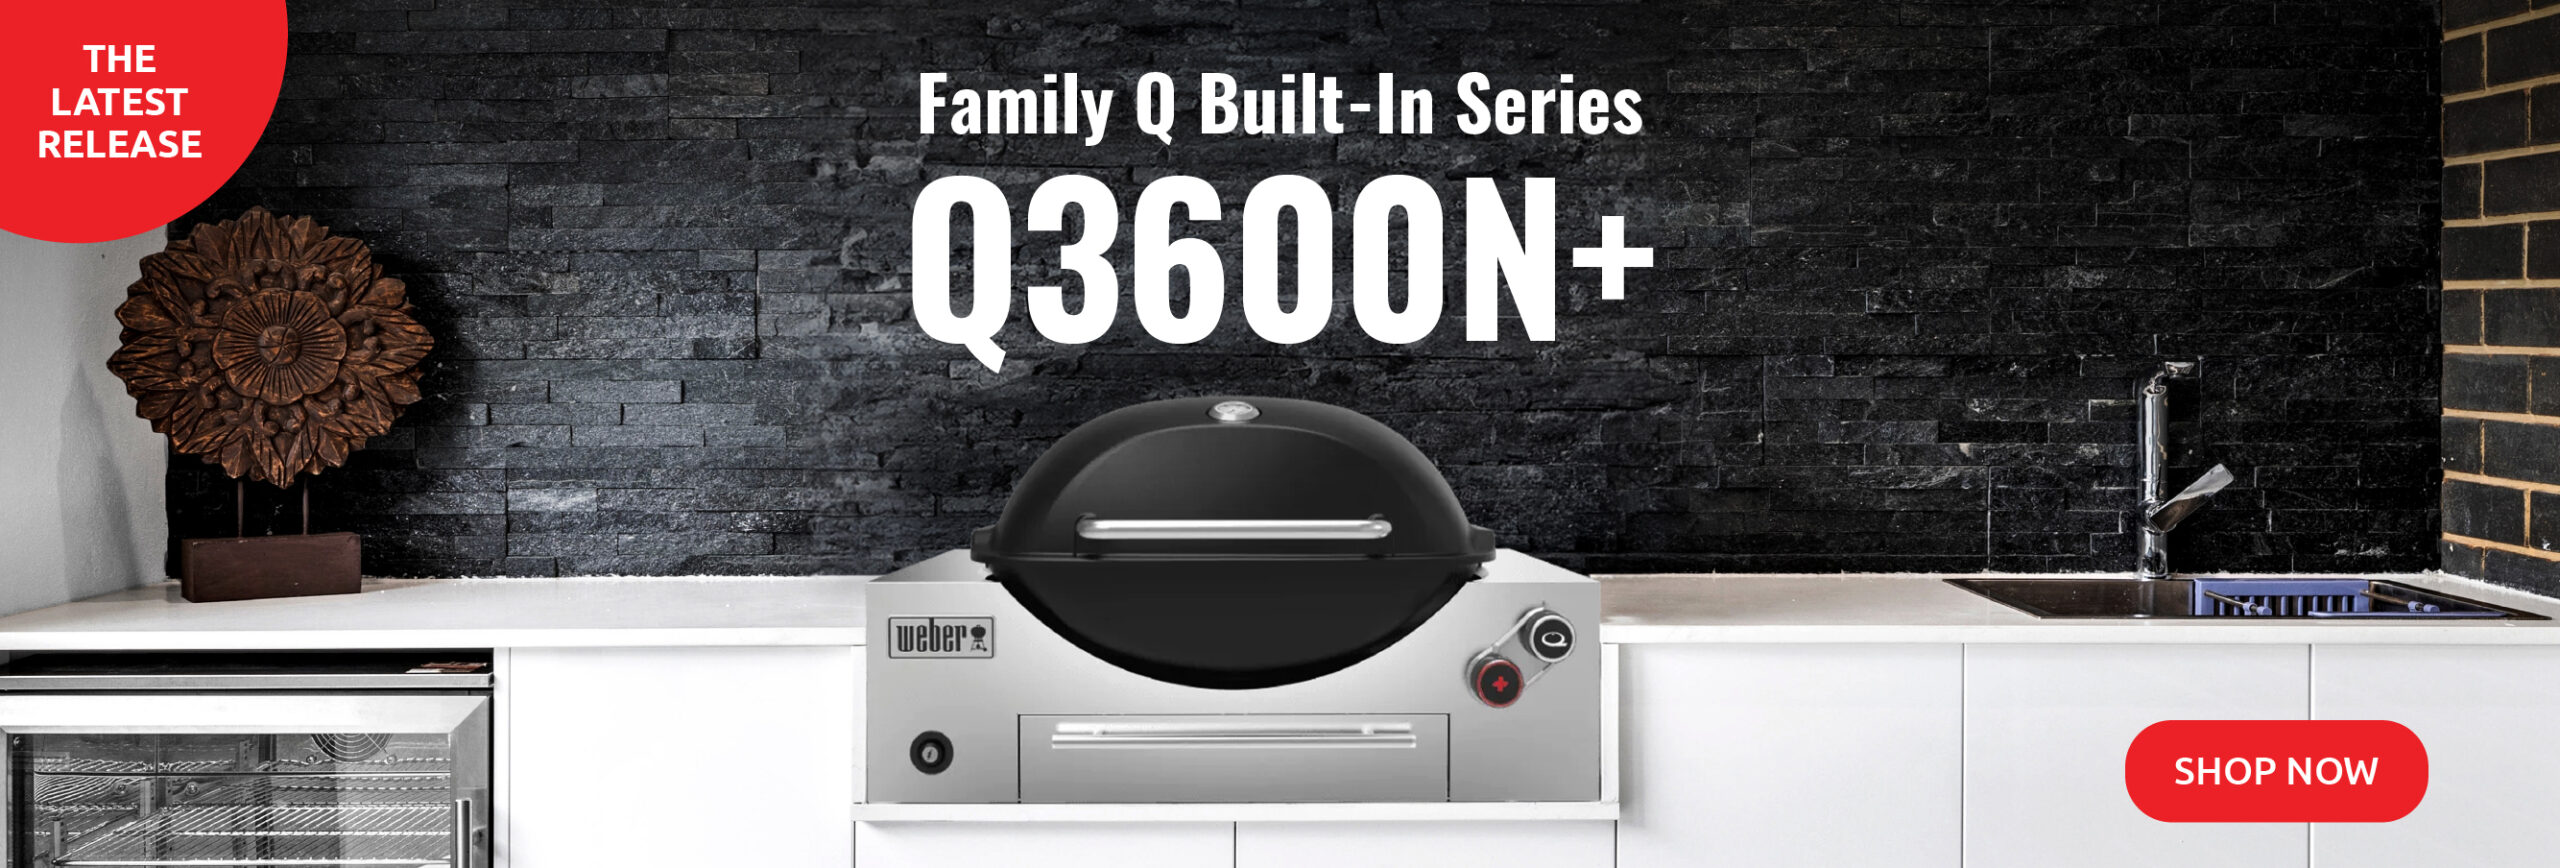 Family Q built-in series Q3600N+